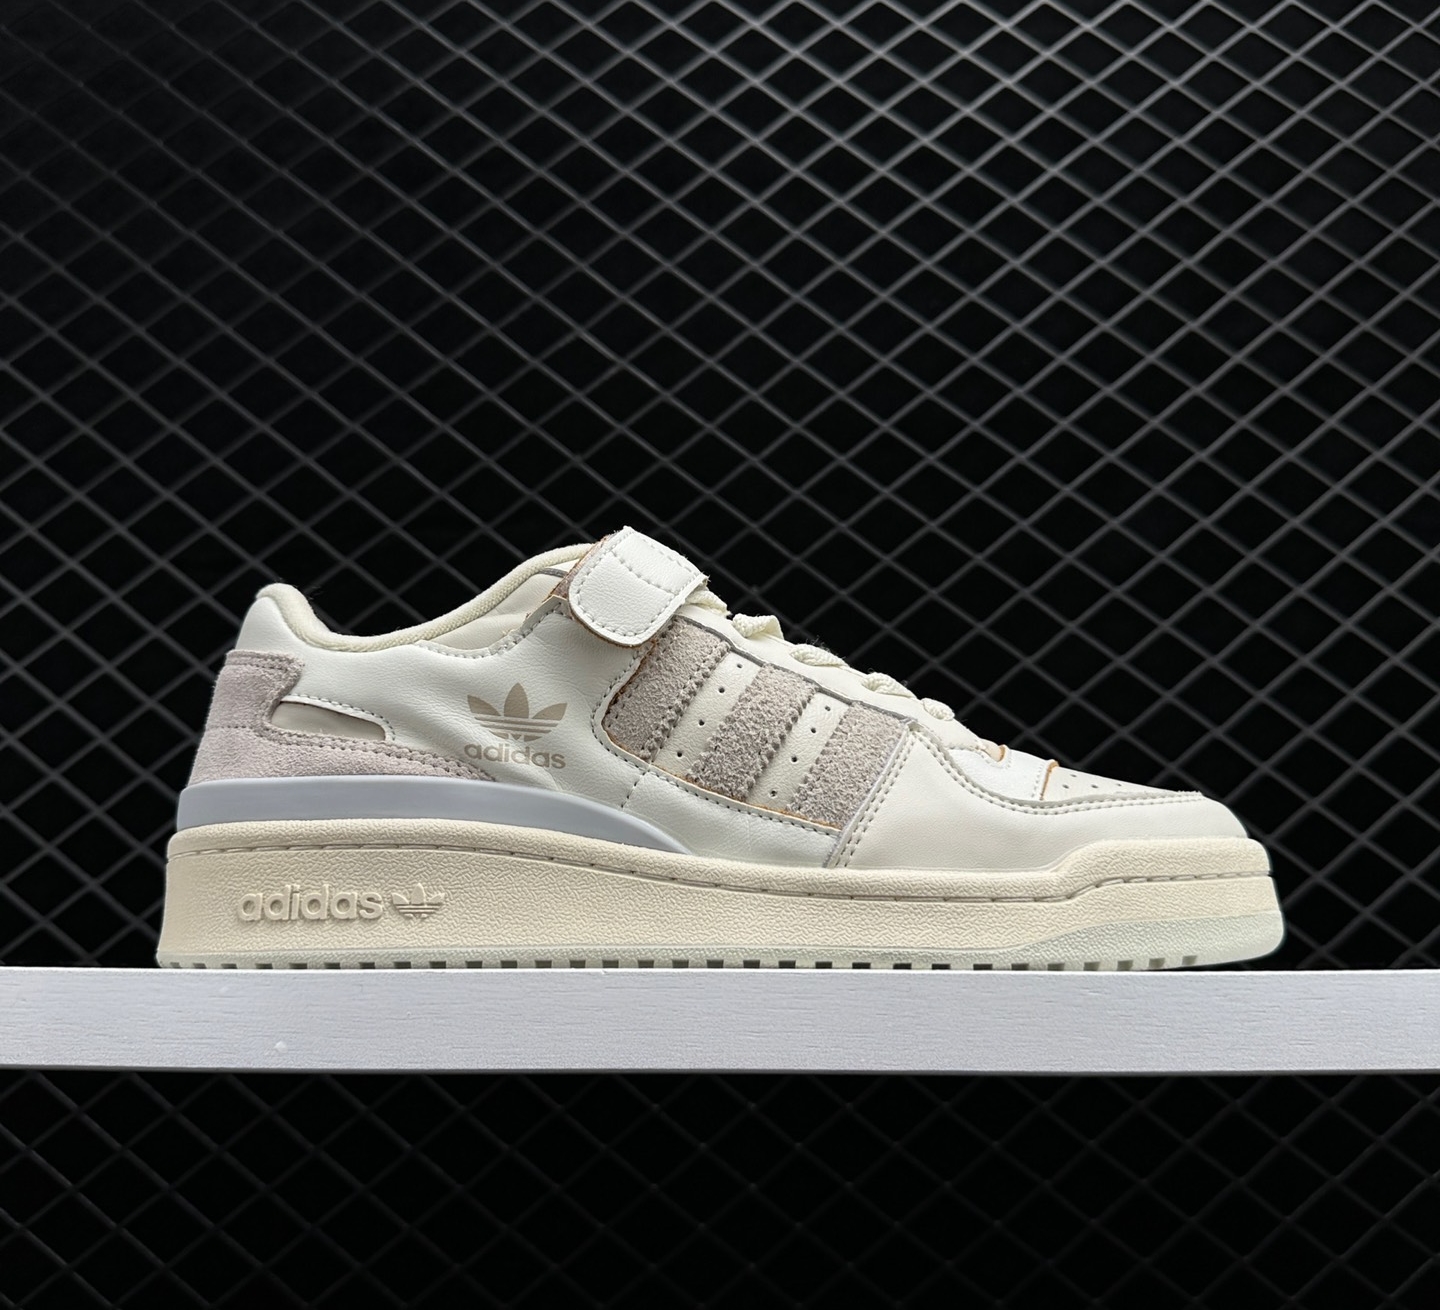 Adidas Forum 84 Low Orbit Grey FY4577 - Stylish and Versatile Sneakers